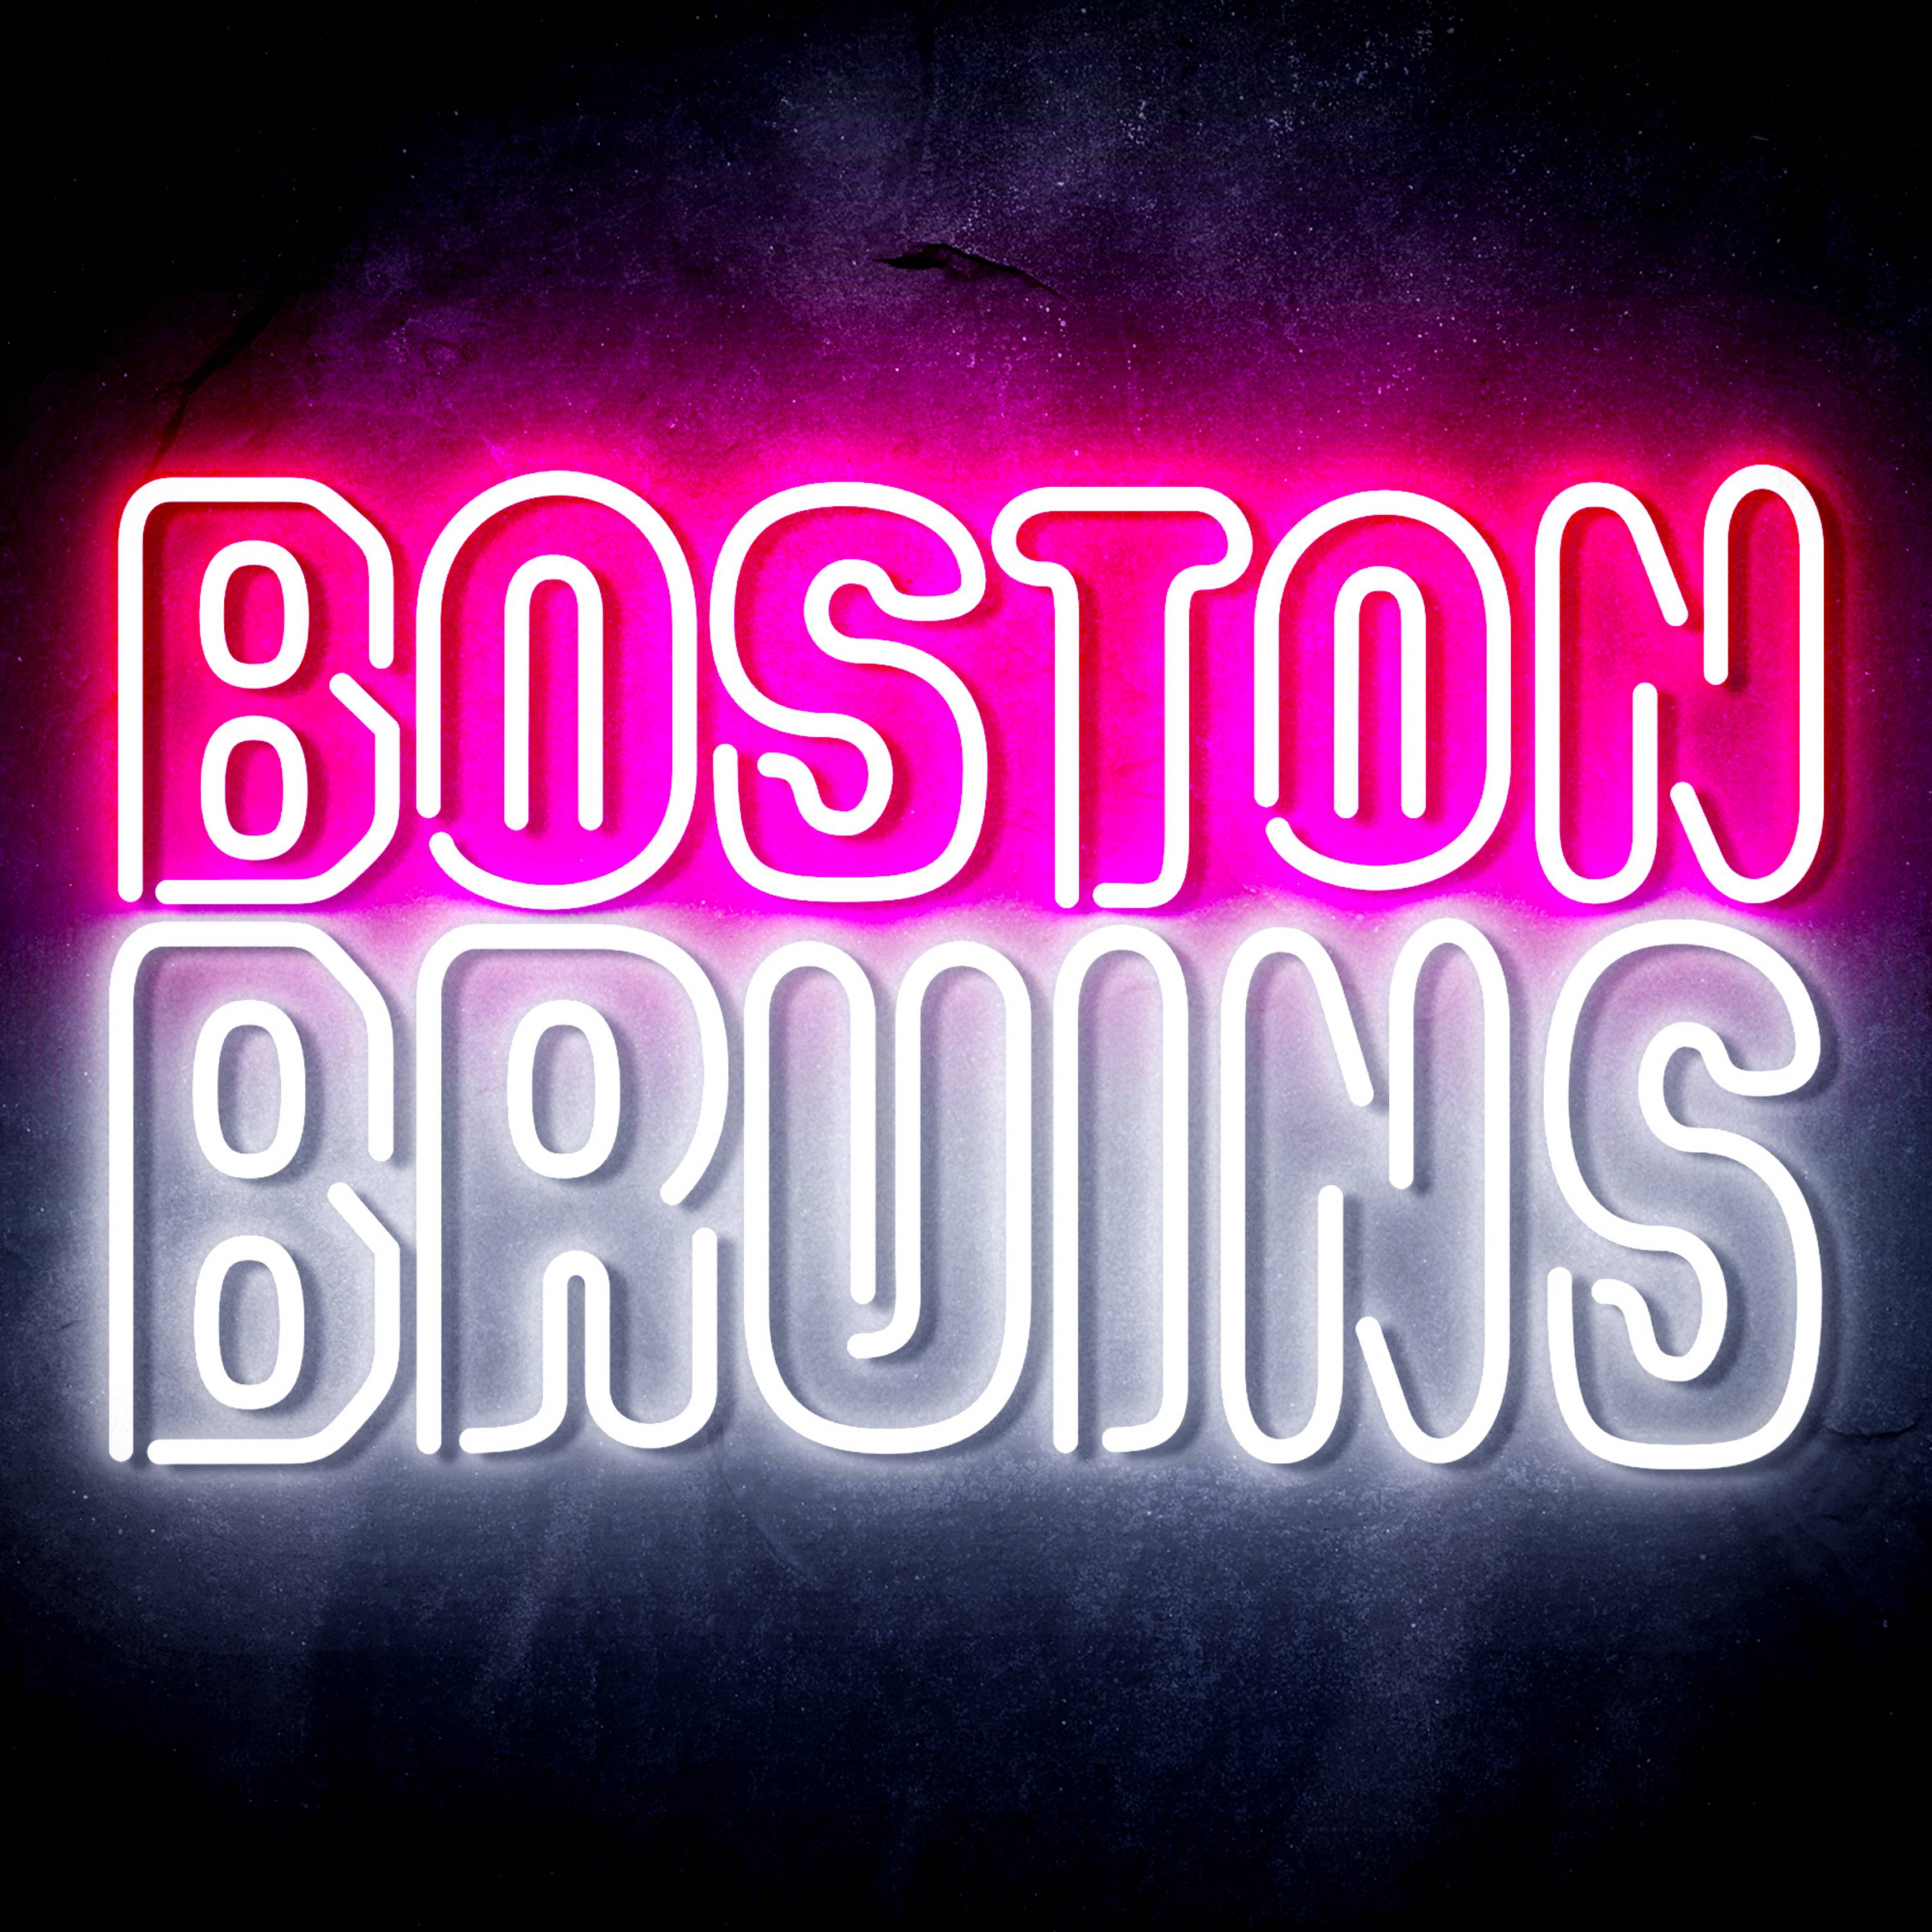 NHL Boston Bruins LED Neon Sign